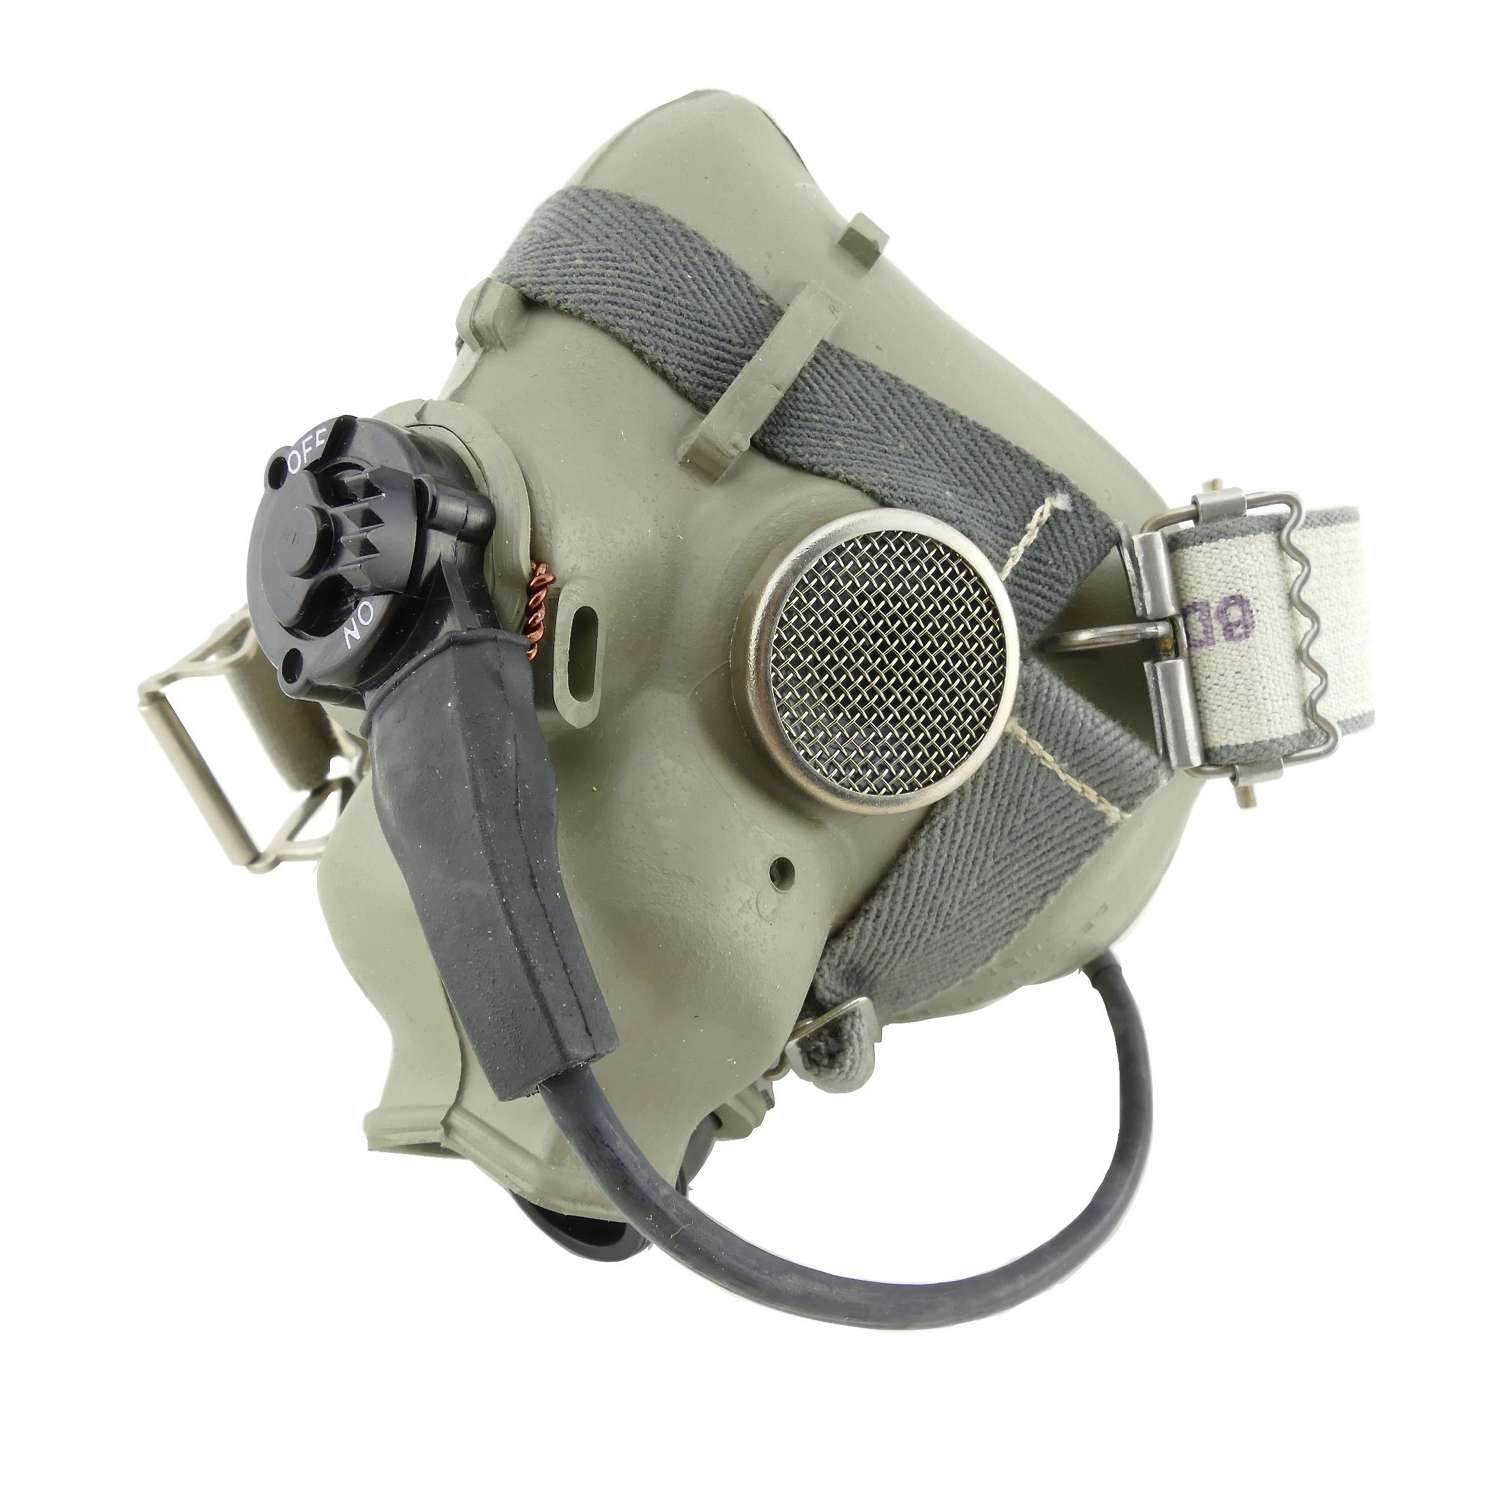 RAF type H2 oxygen mask